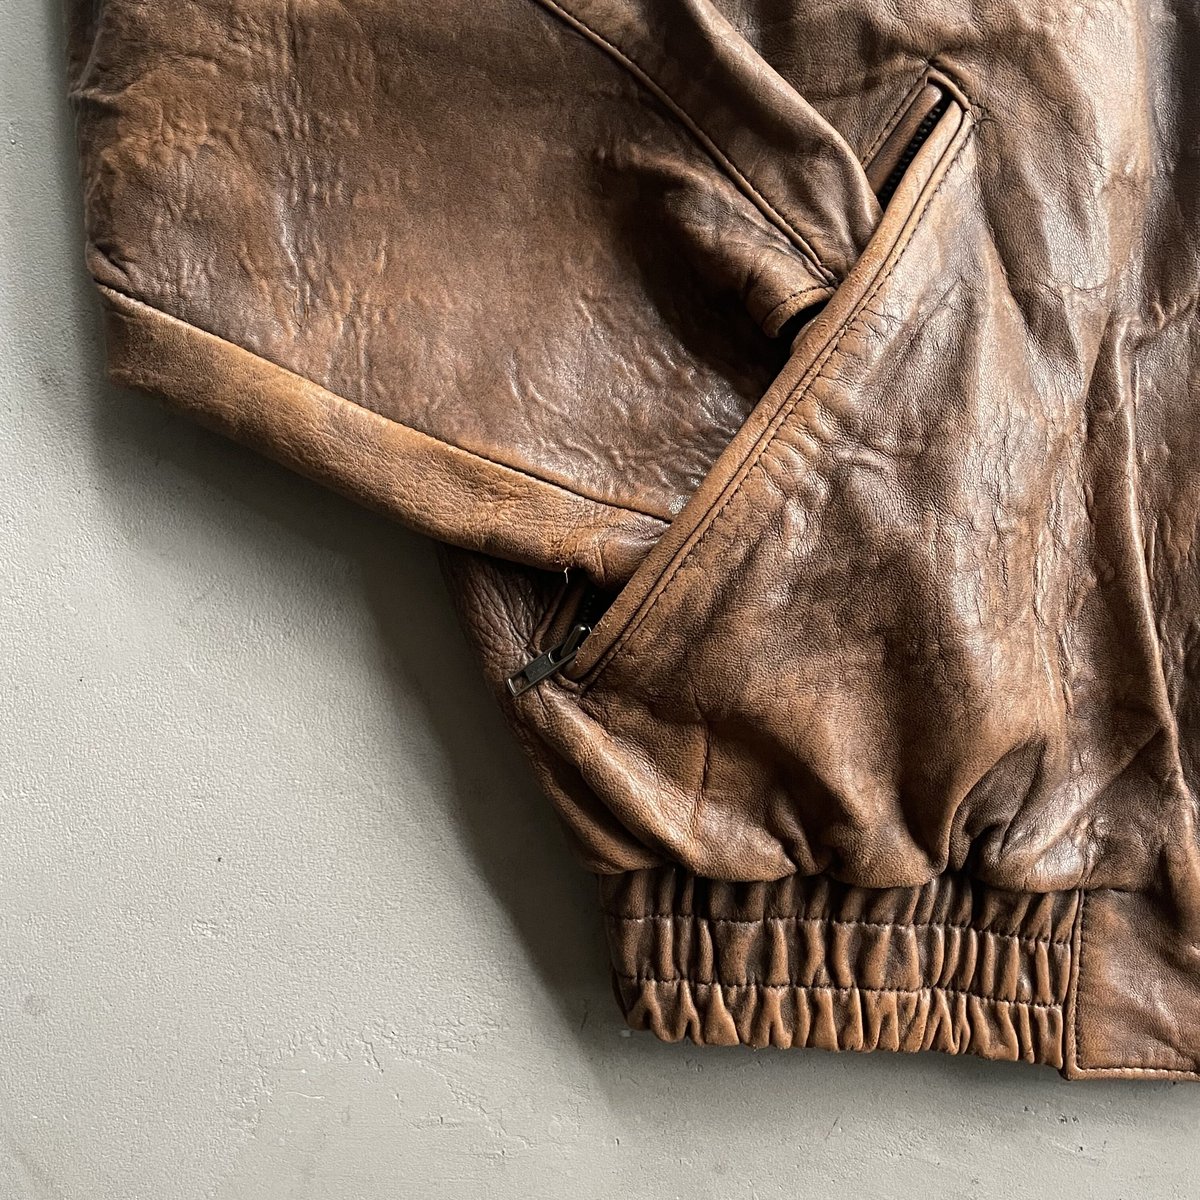 90s Luis alvear leather jacket | sui & shara